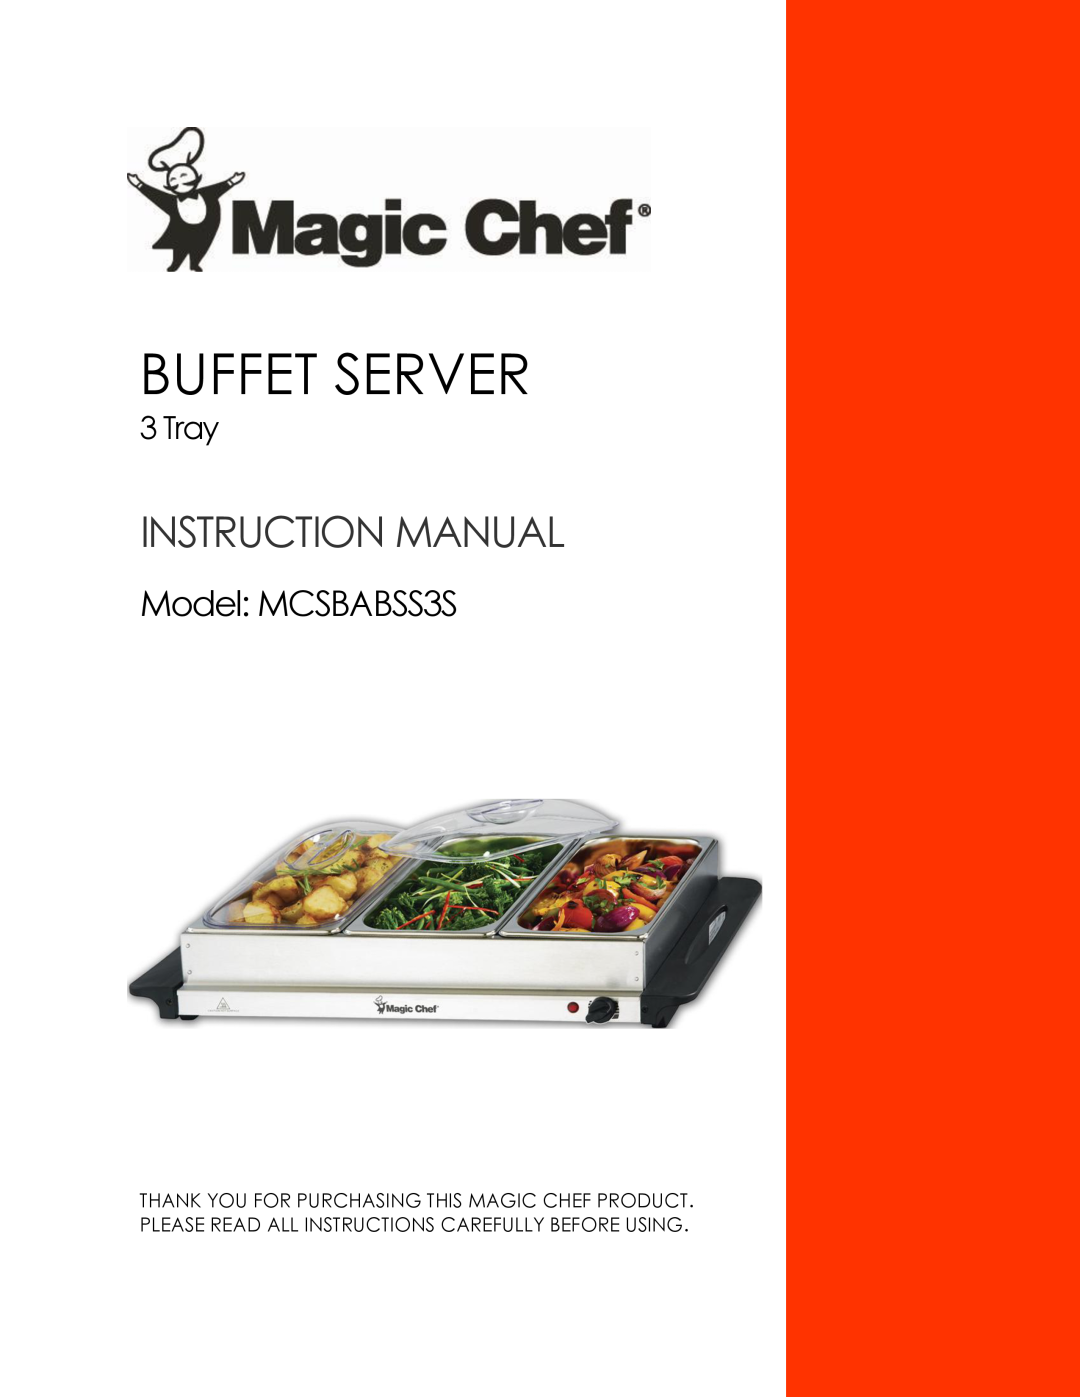 Magic Chef instruction manual Buffet Server, Model MCSBABSS3S, Tray 